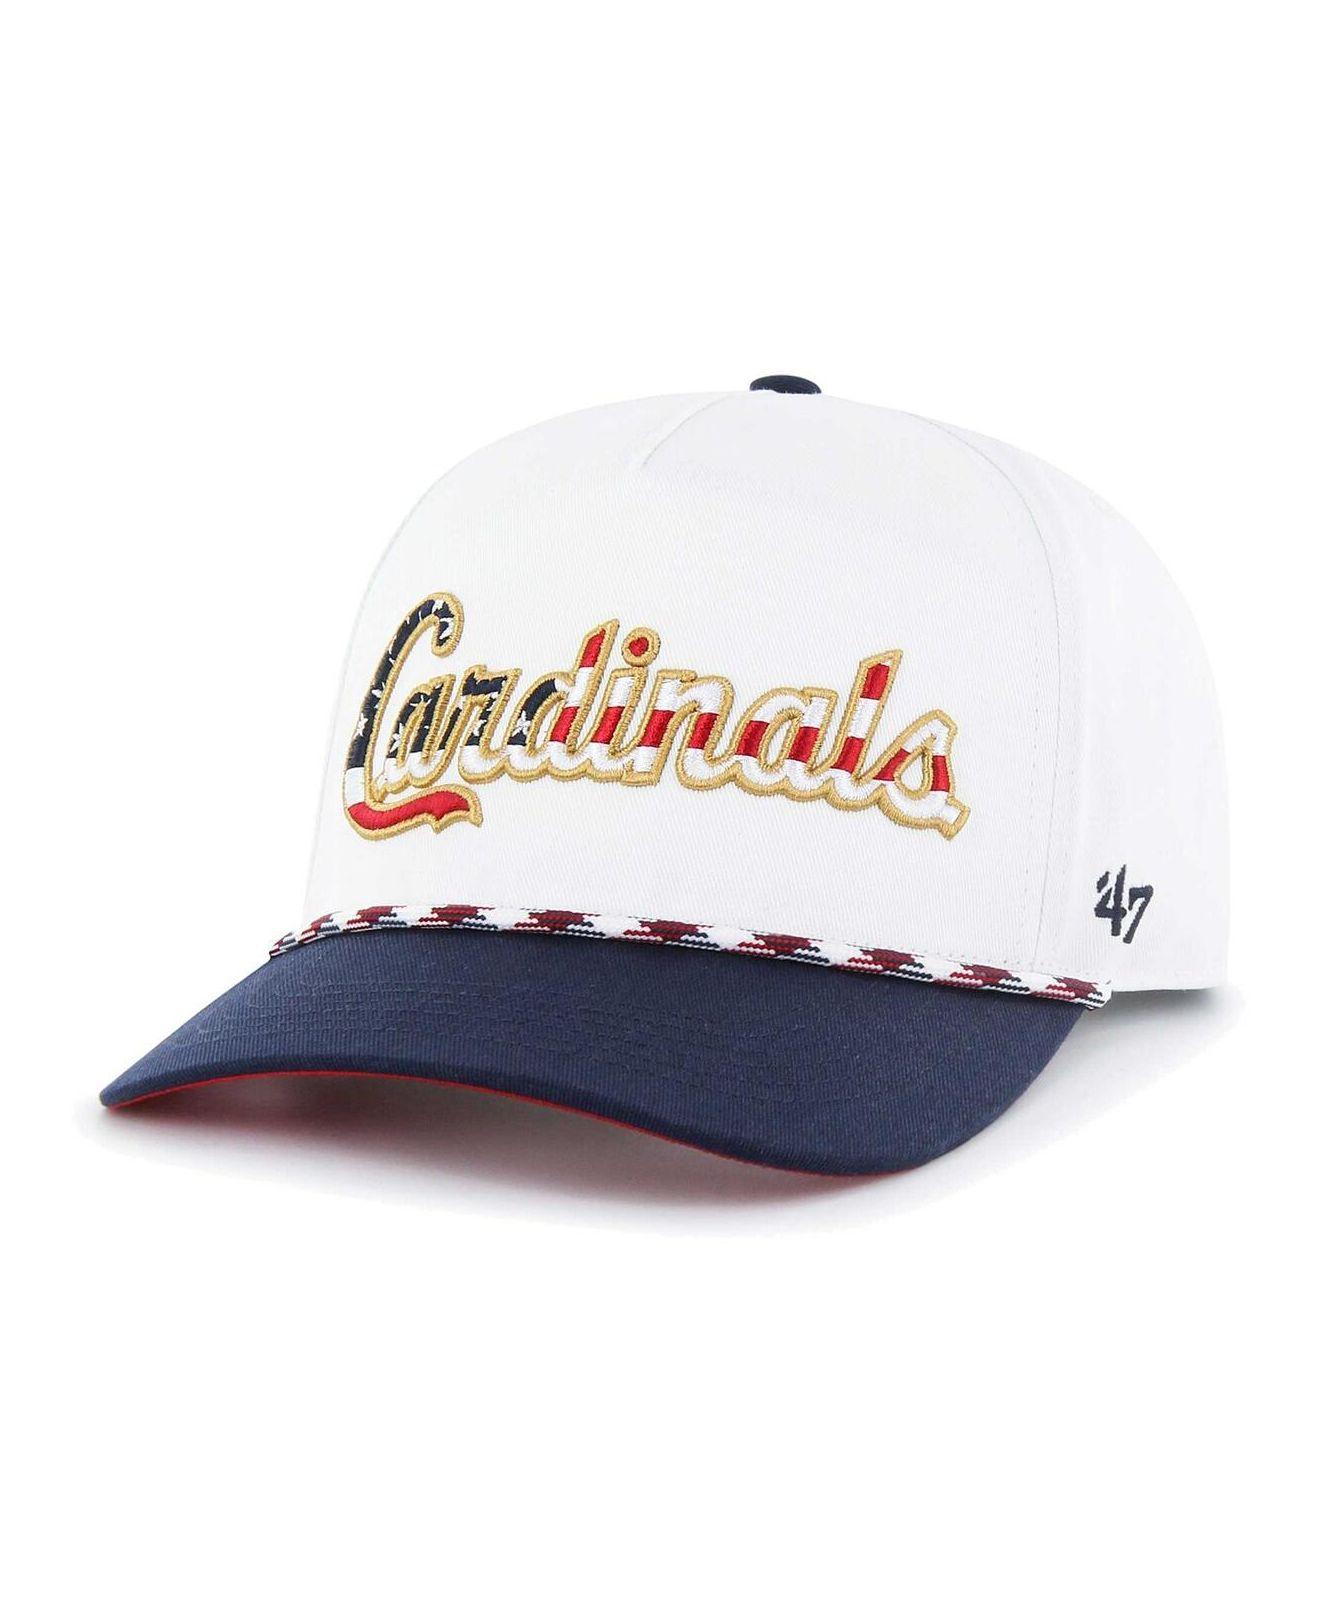 St. Louis Blues '47 Downburst Hitch Snapback Hat - White